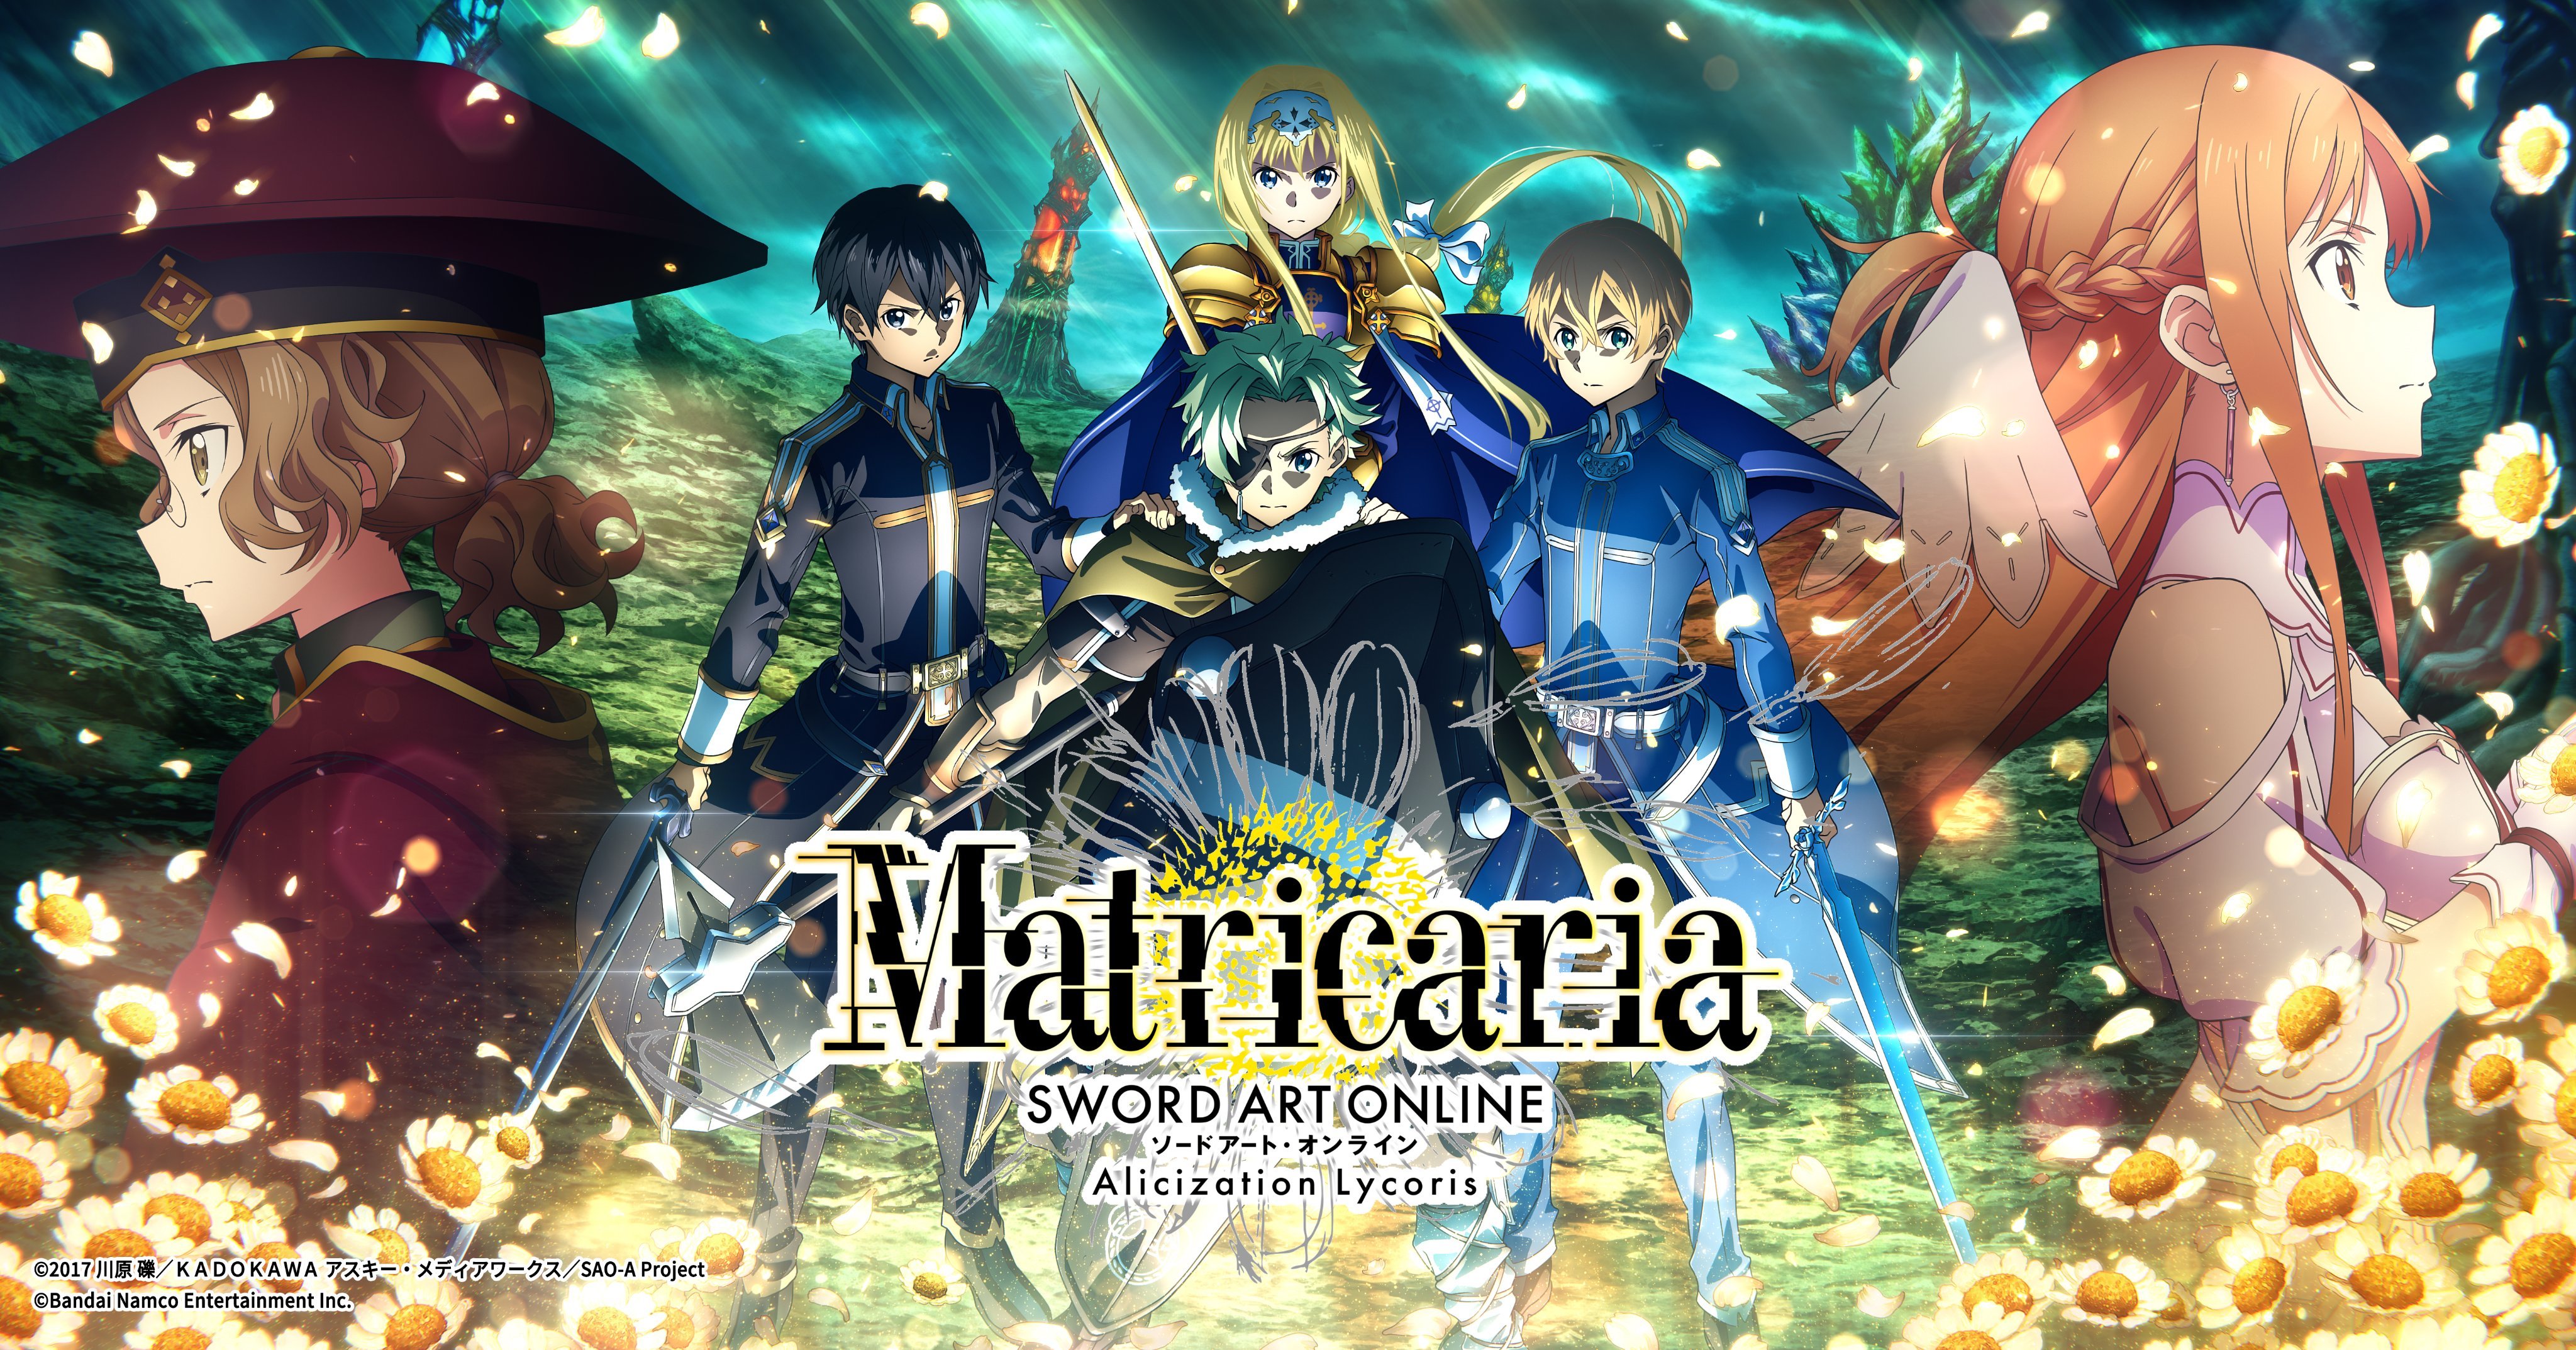 Sword Art Online: Alicization Lycoris DLC expansion 'Blooming of  Matricaria' announced - Gematsu